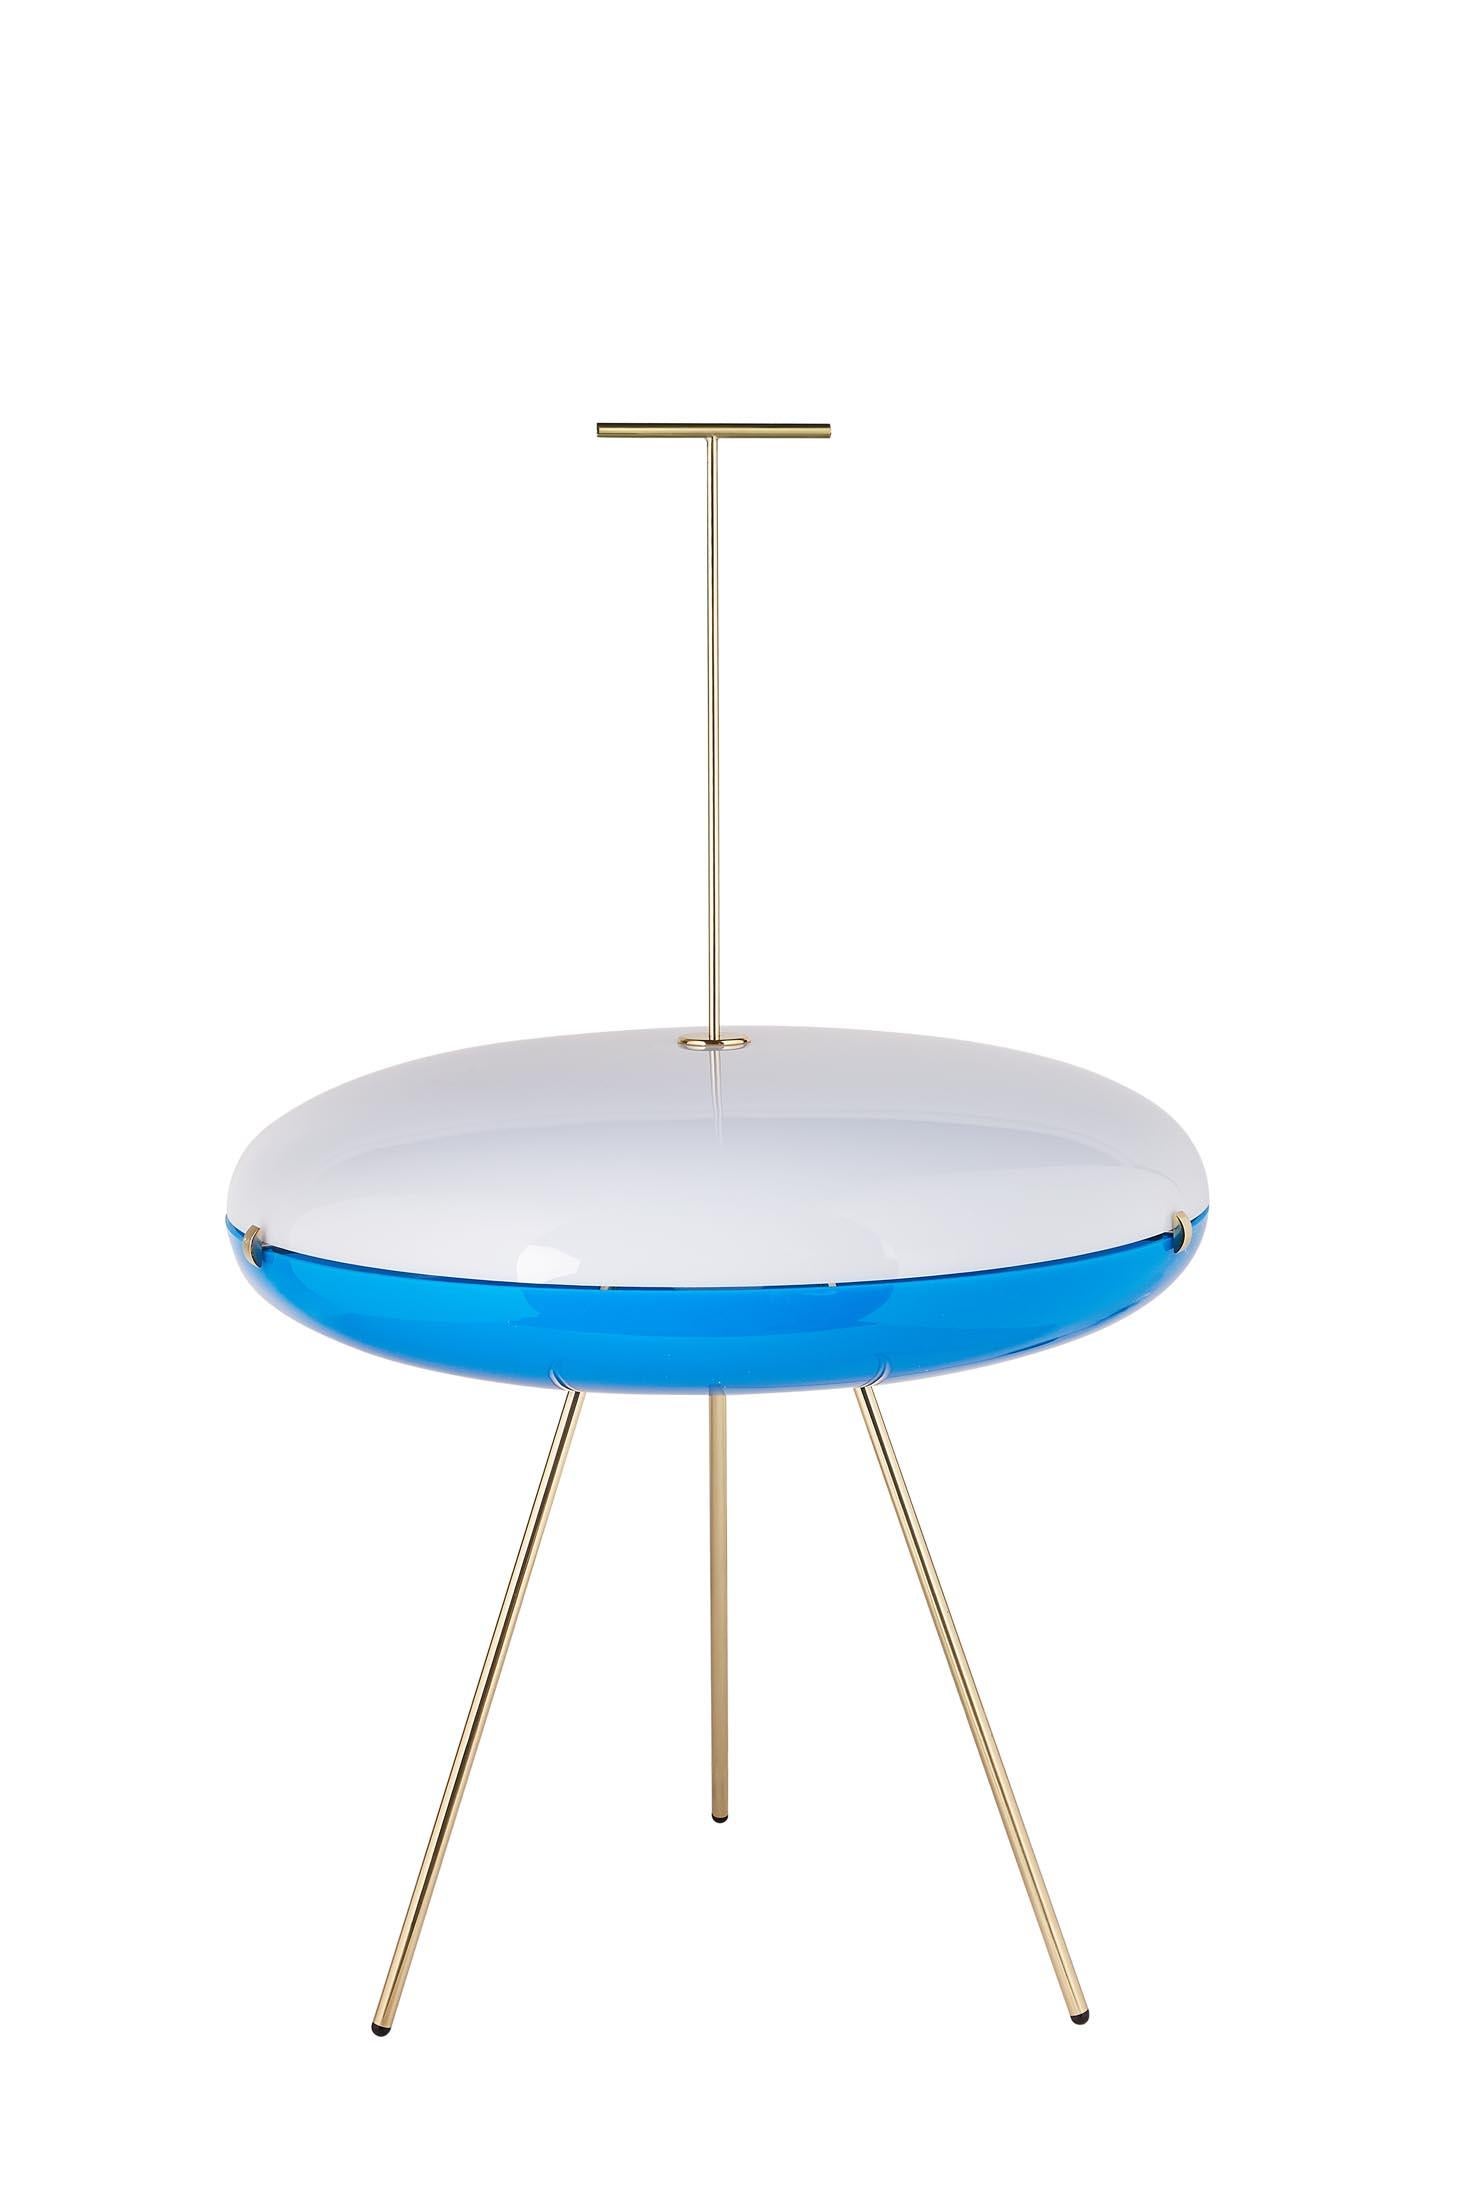 Gio Ponti Luna Verticale Floor Lamp in Nickel for Tato Italia For Sale 5